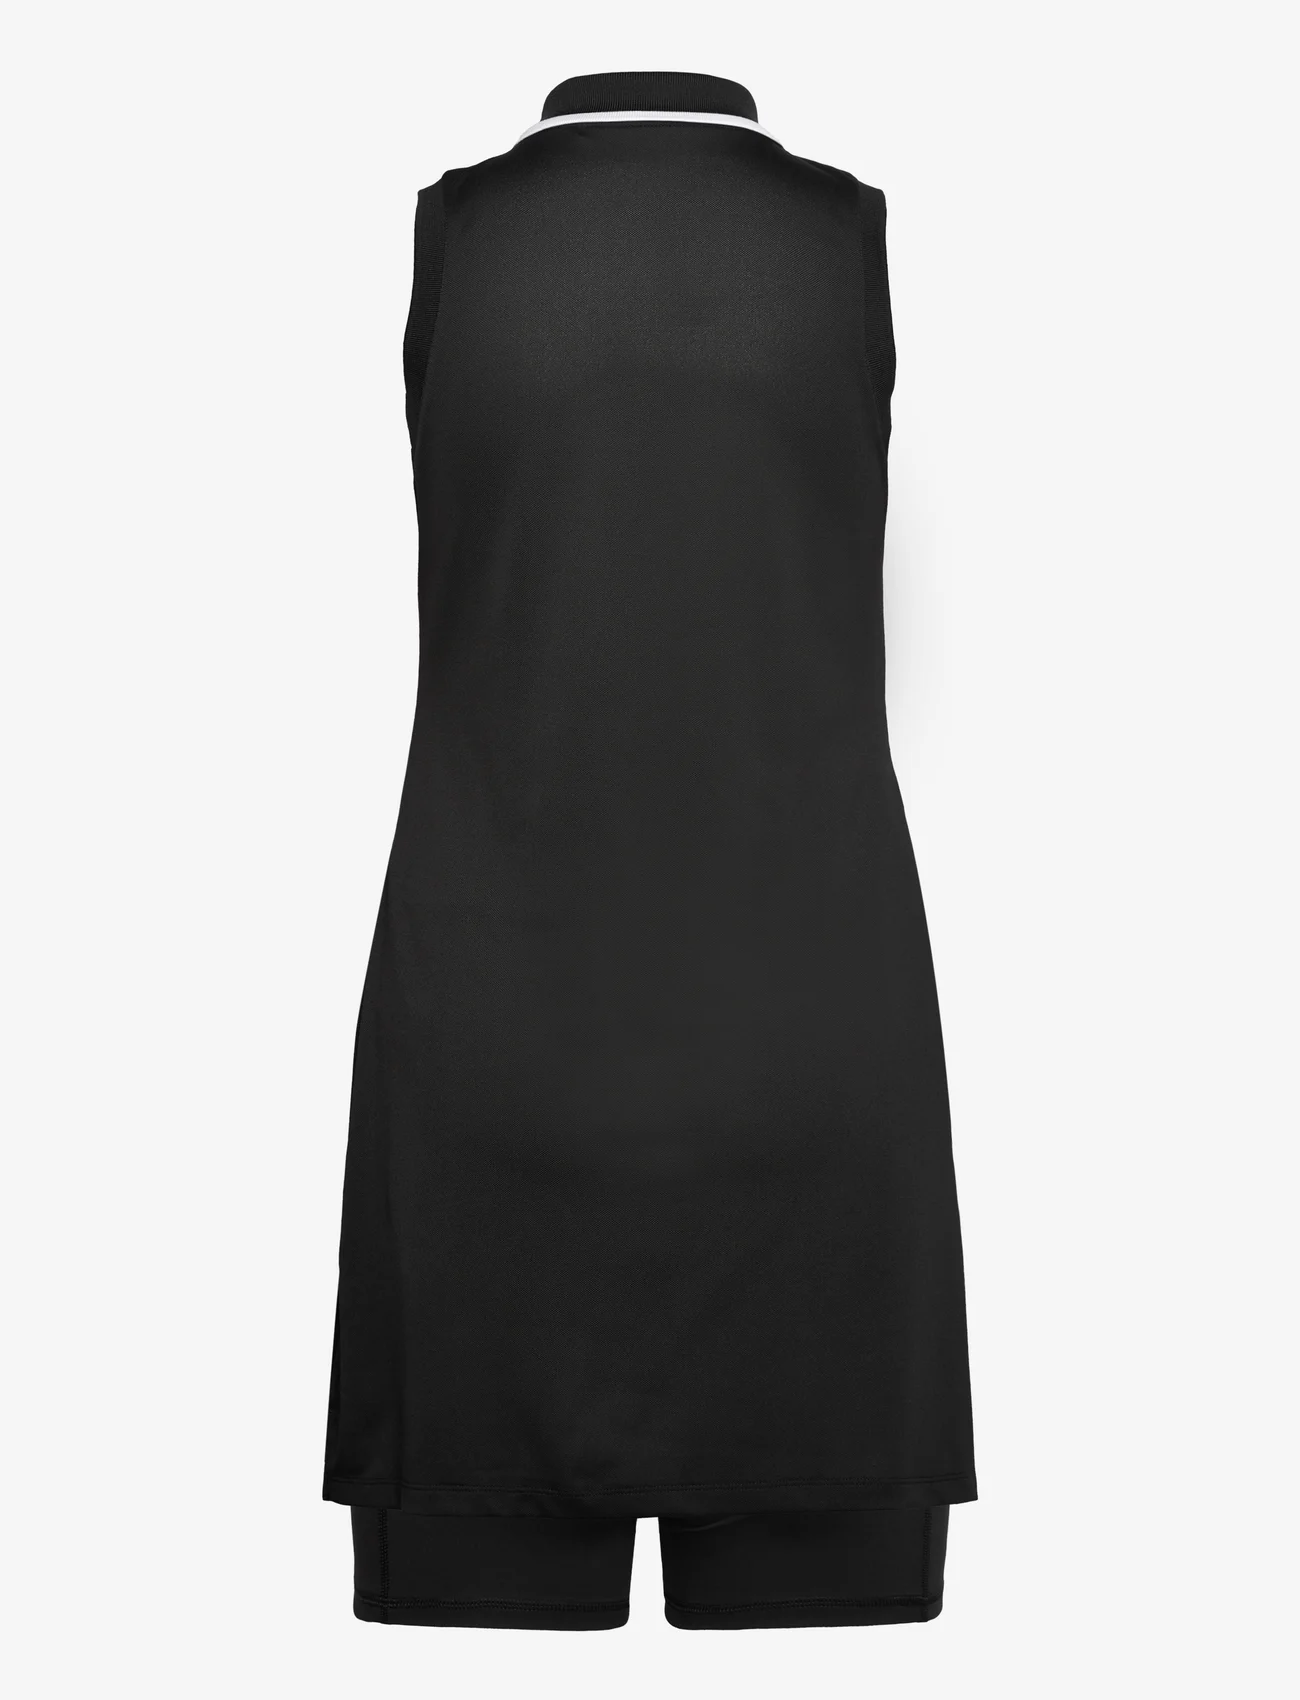 PUMA Golf - W Everyday Pique Dress - sportklänningar - puma black - 1